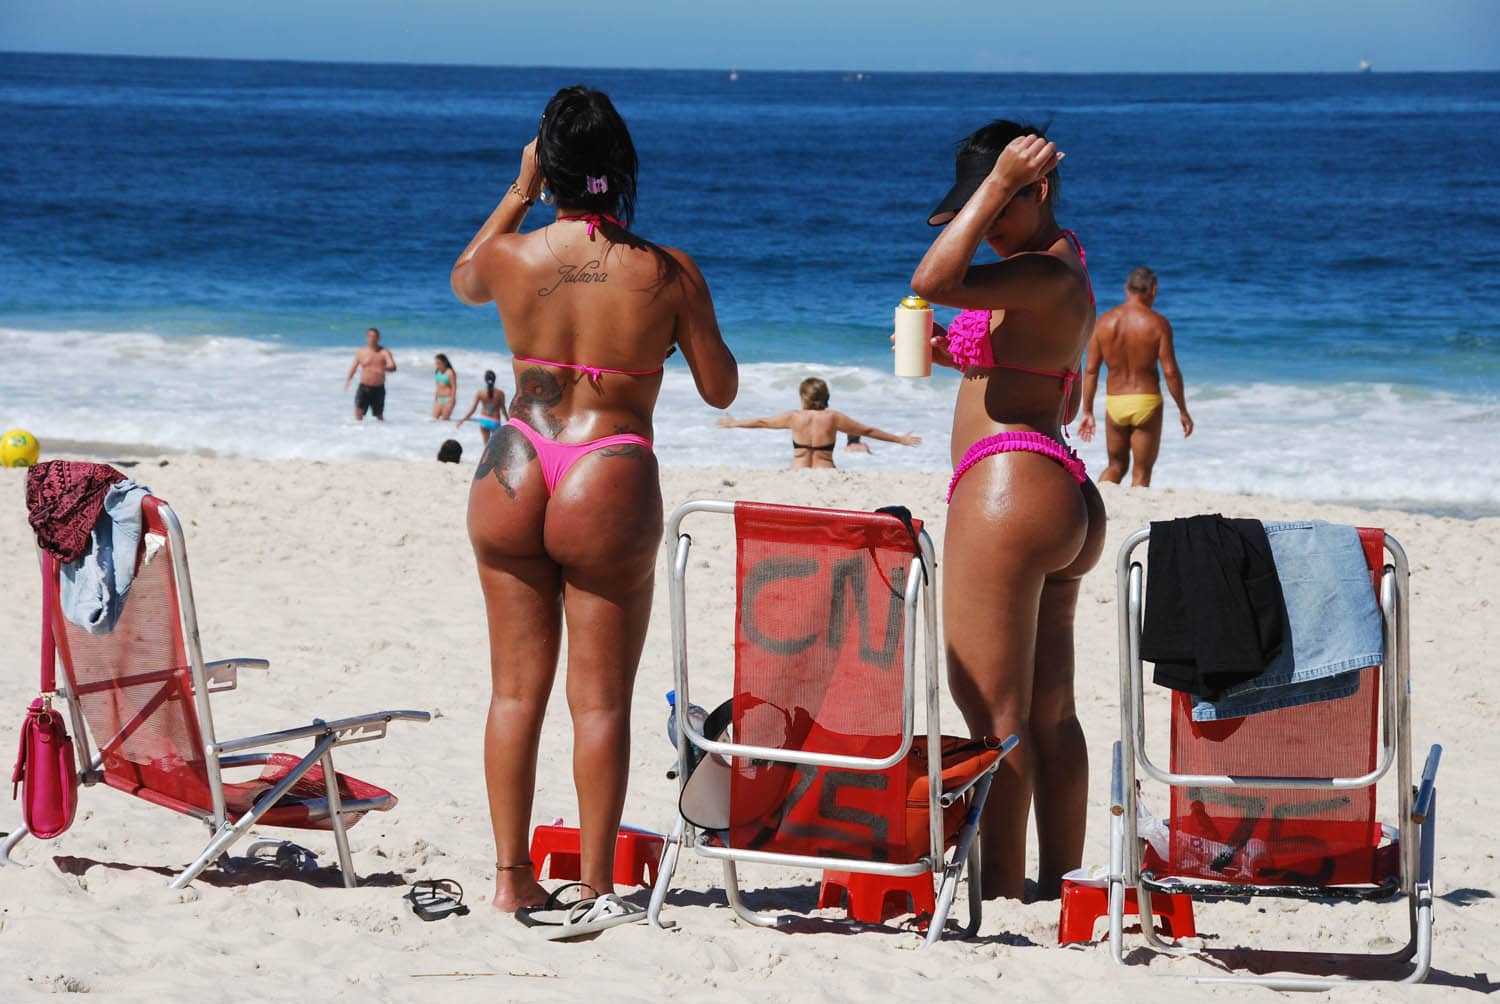 Brazillian thong bikinis